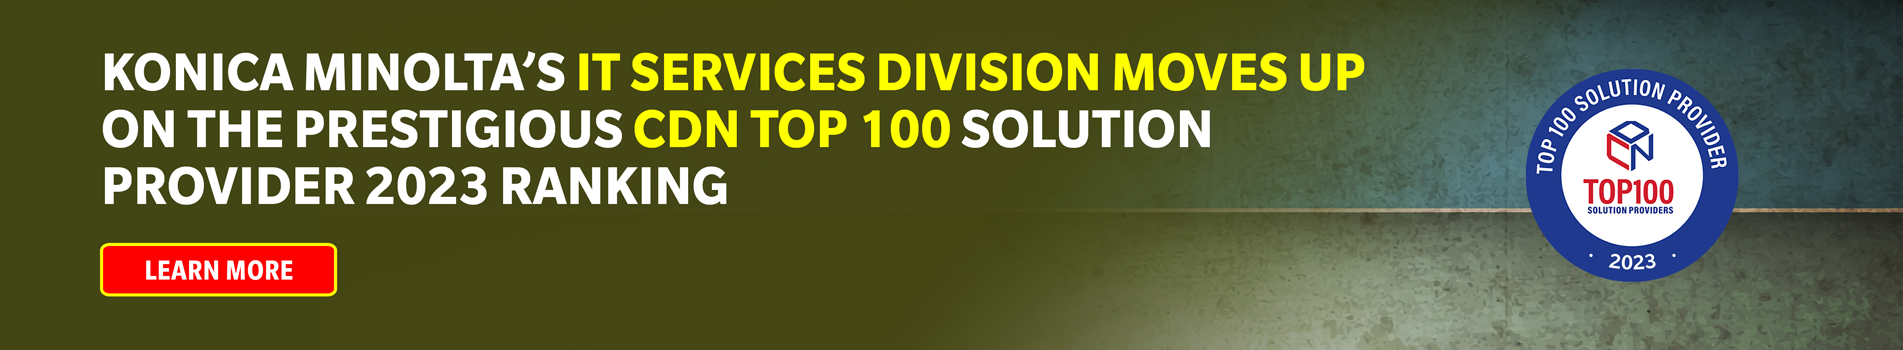 Top 100 Solution Provider Ranking by CDN Recognizes Konica Minolta